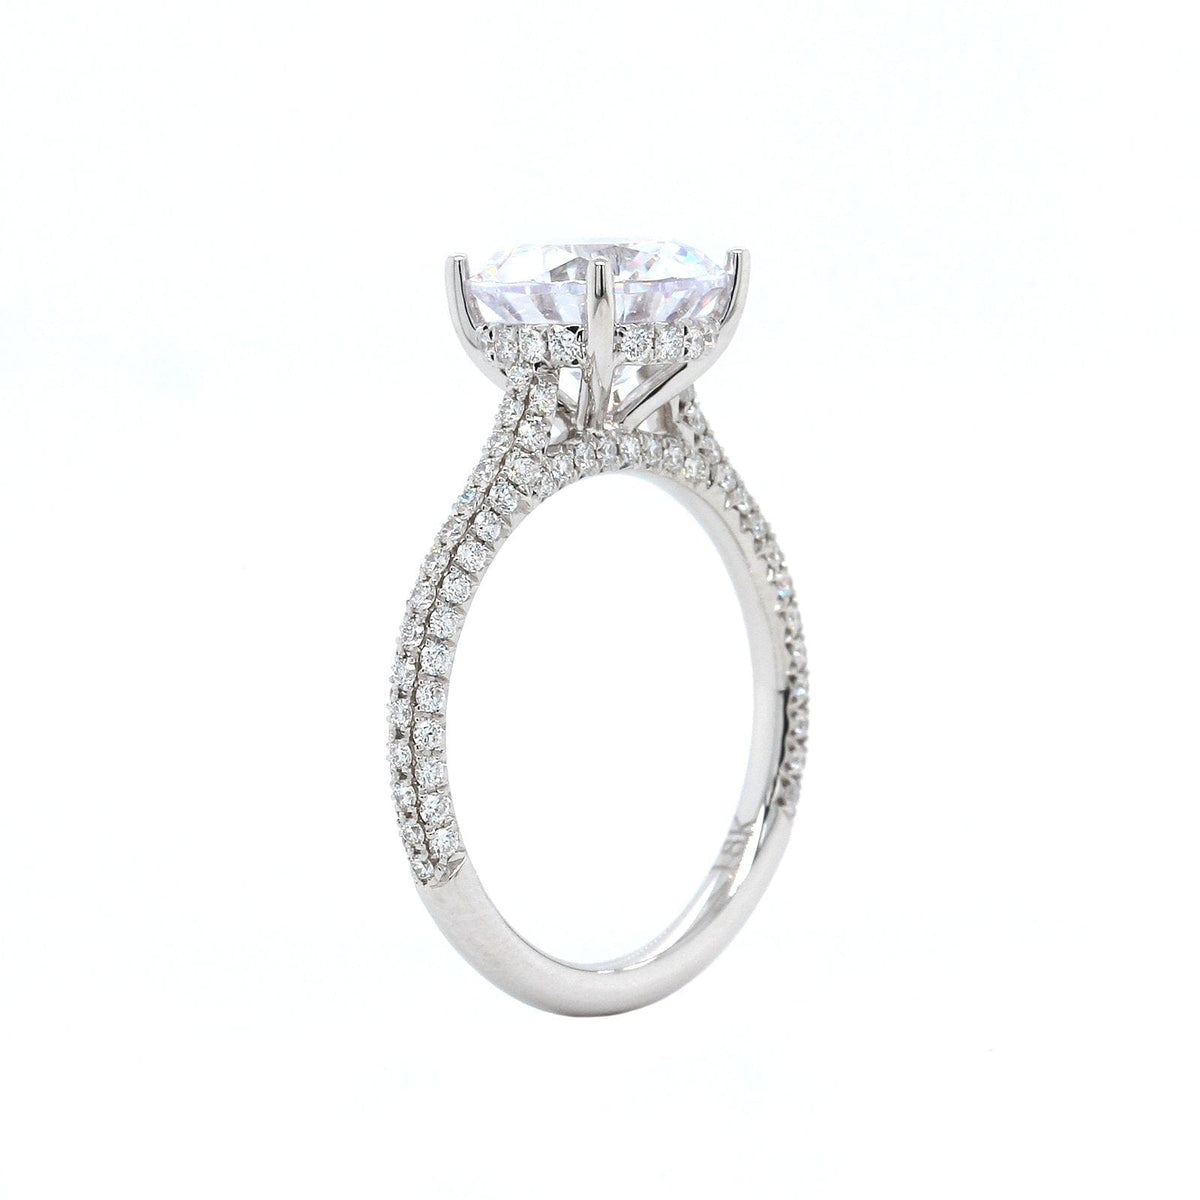 18K White Gold 3 Row Pave Diamond Engagement Ring Setting